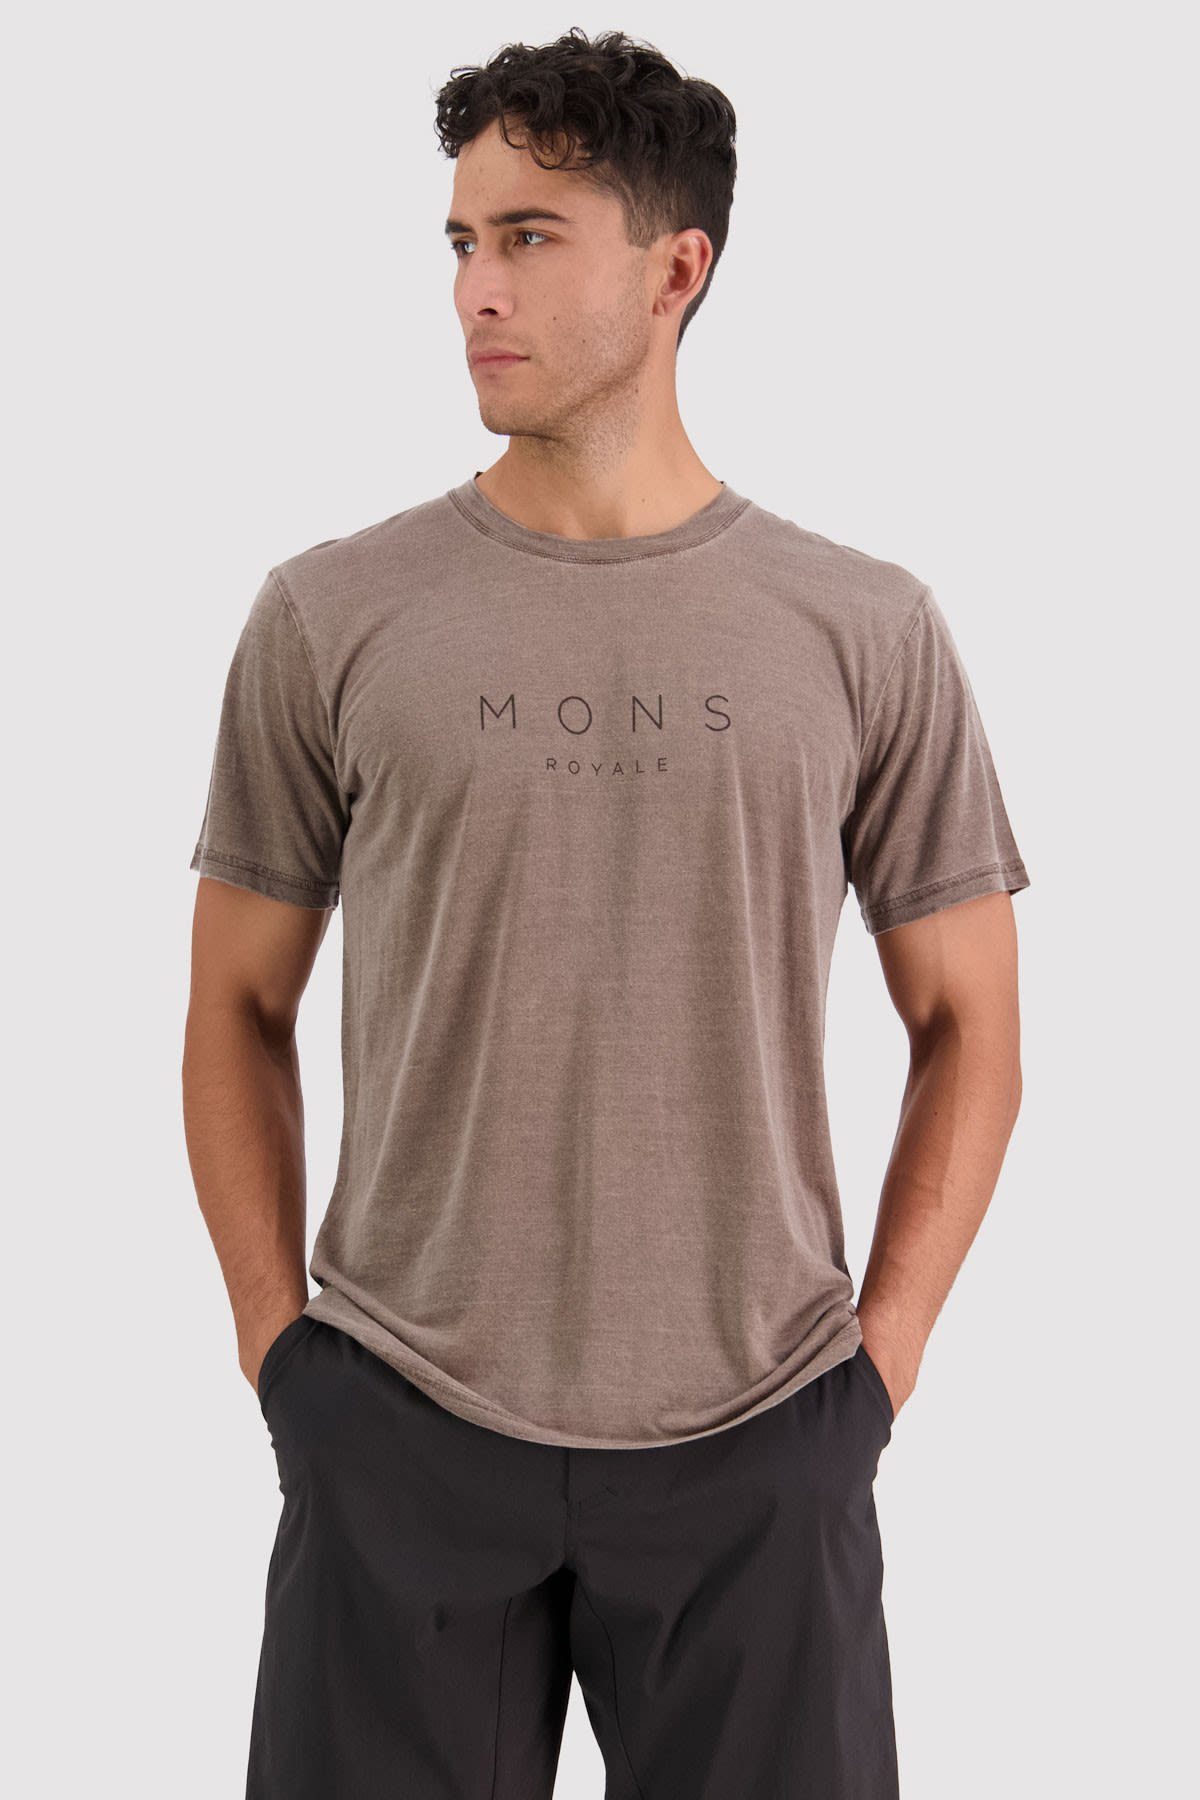 Mons Royale Walnut Royale Zephyr T-shirt T-Shirt Herren M Mons Kurzarm-Shirt